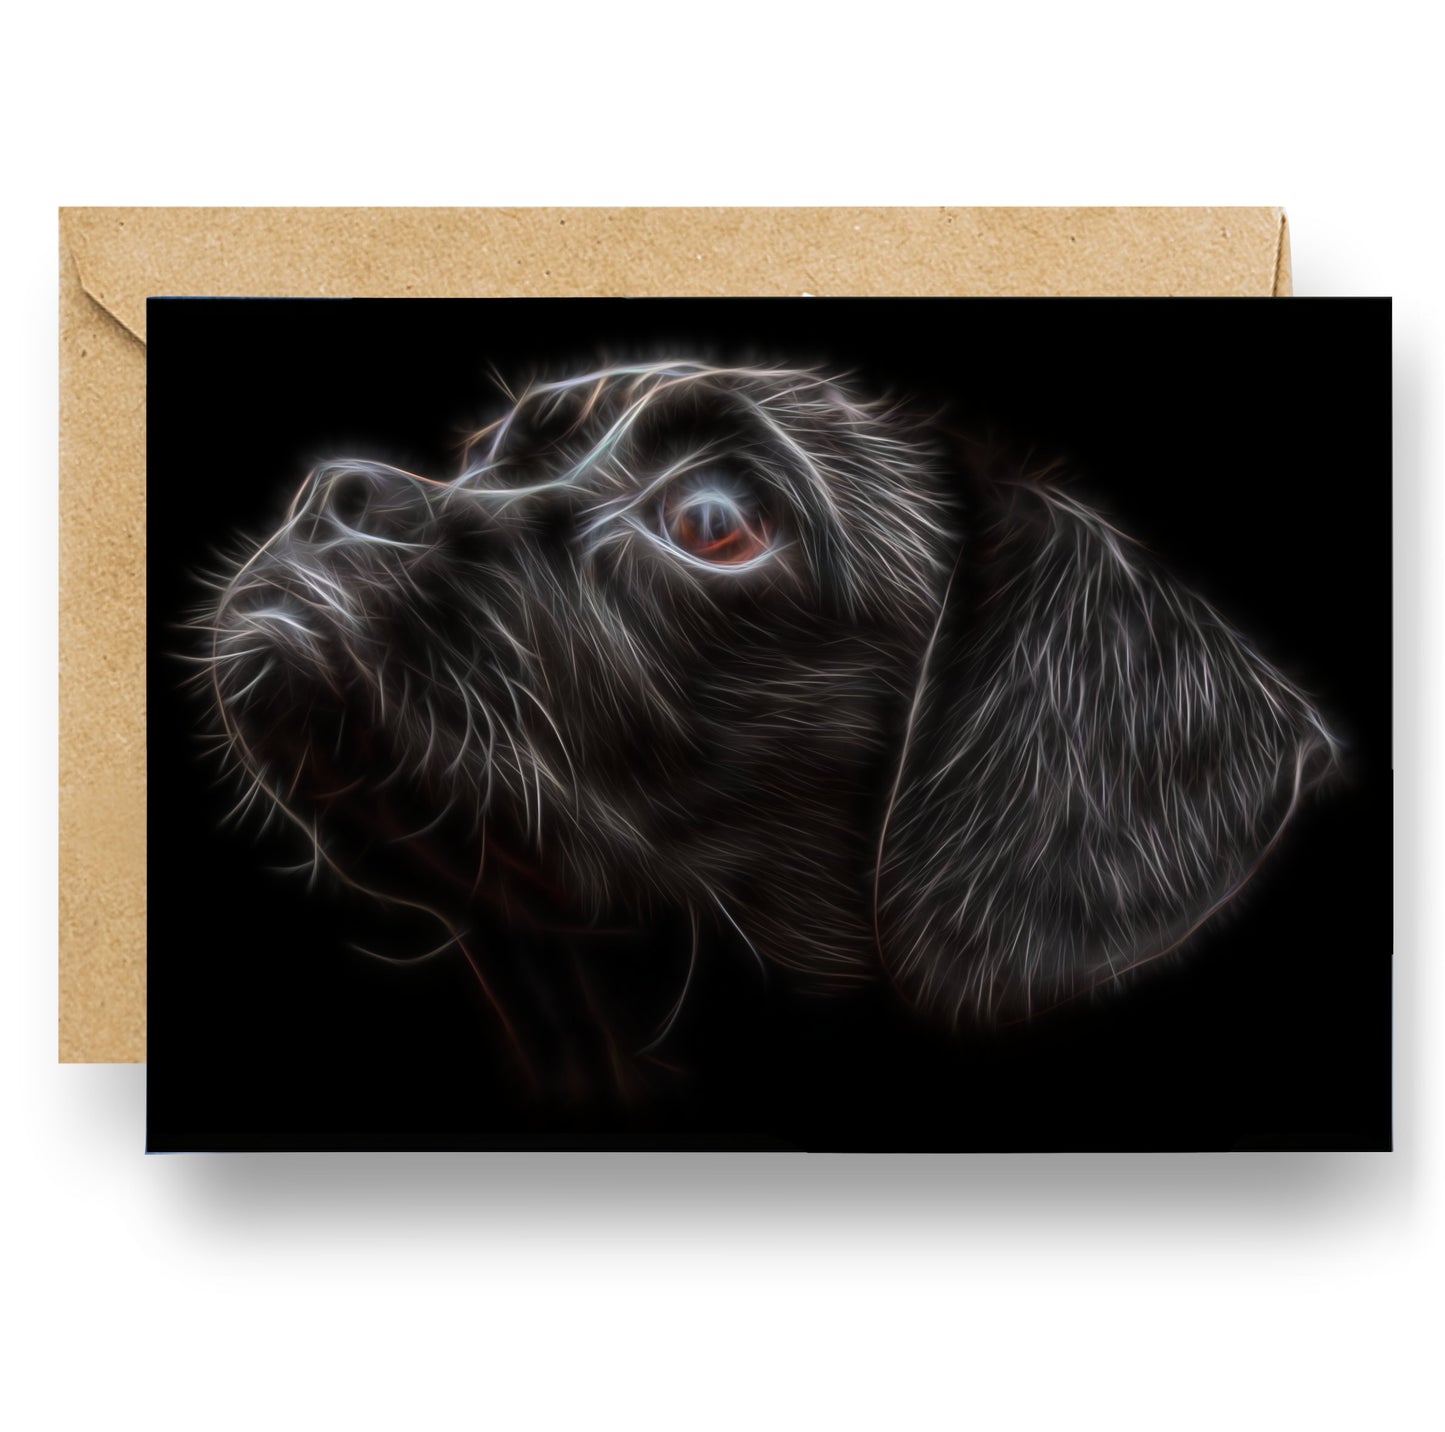 Black Puggle Greeting Card with Stunning Fractal Art Design